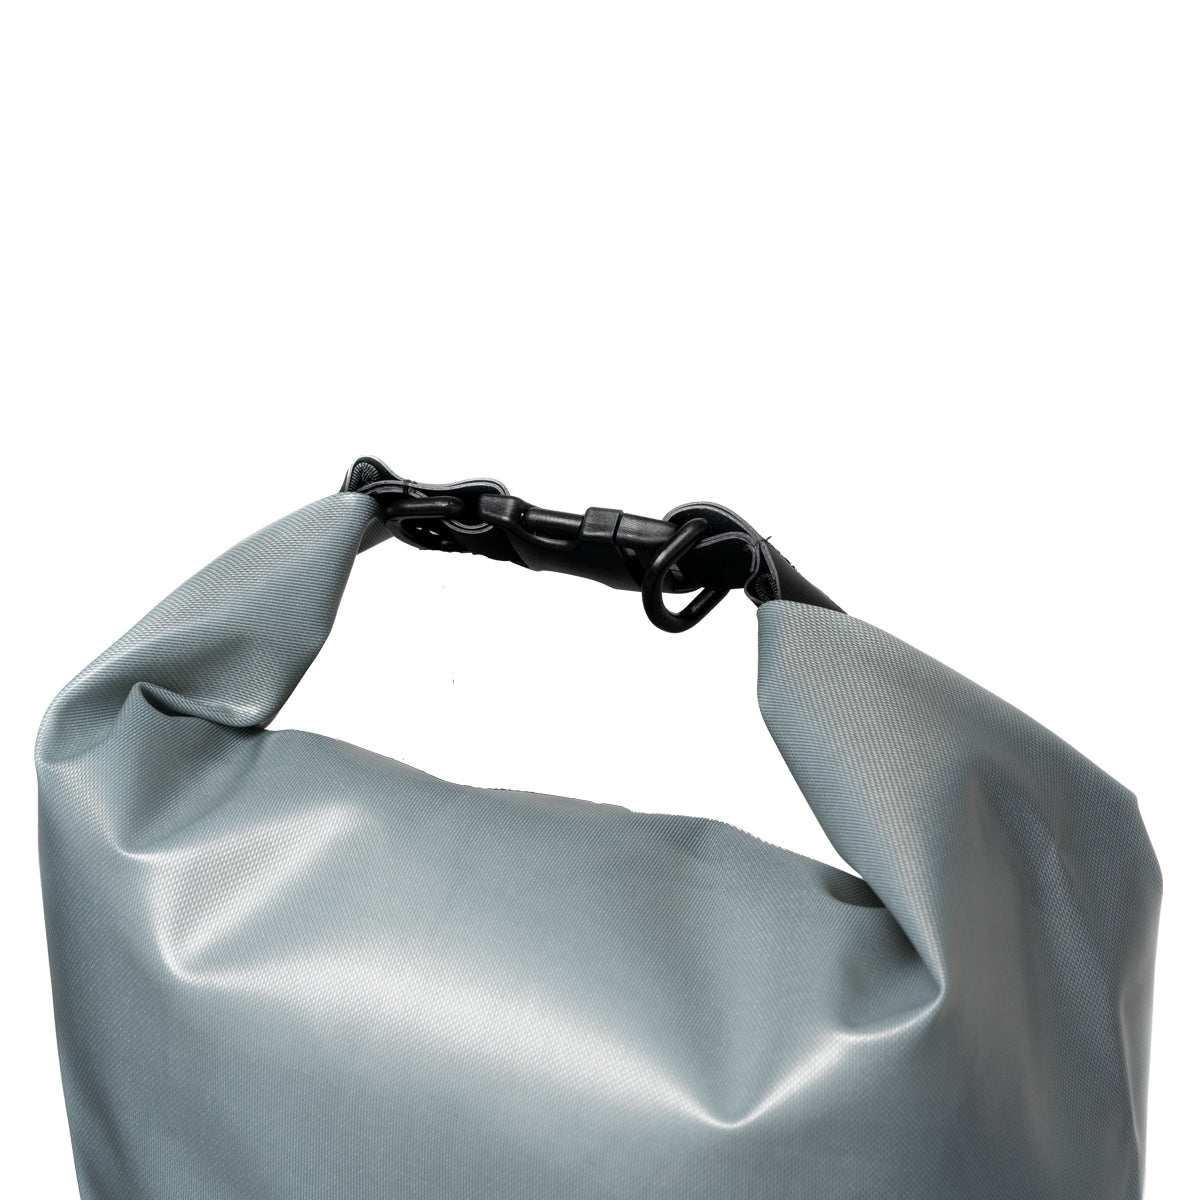 Koyukon Extreme Roll Top Dry Bag in  by GOHUNT | Koyukon - GOHUNT Shop